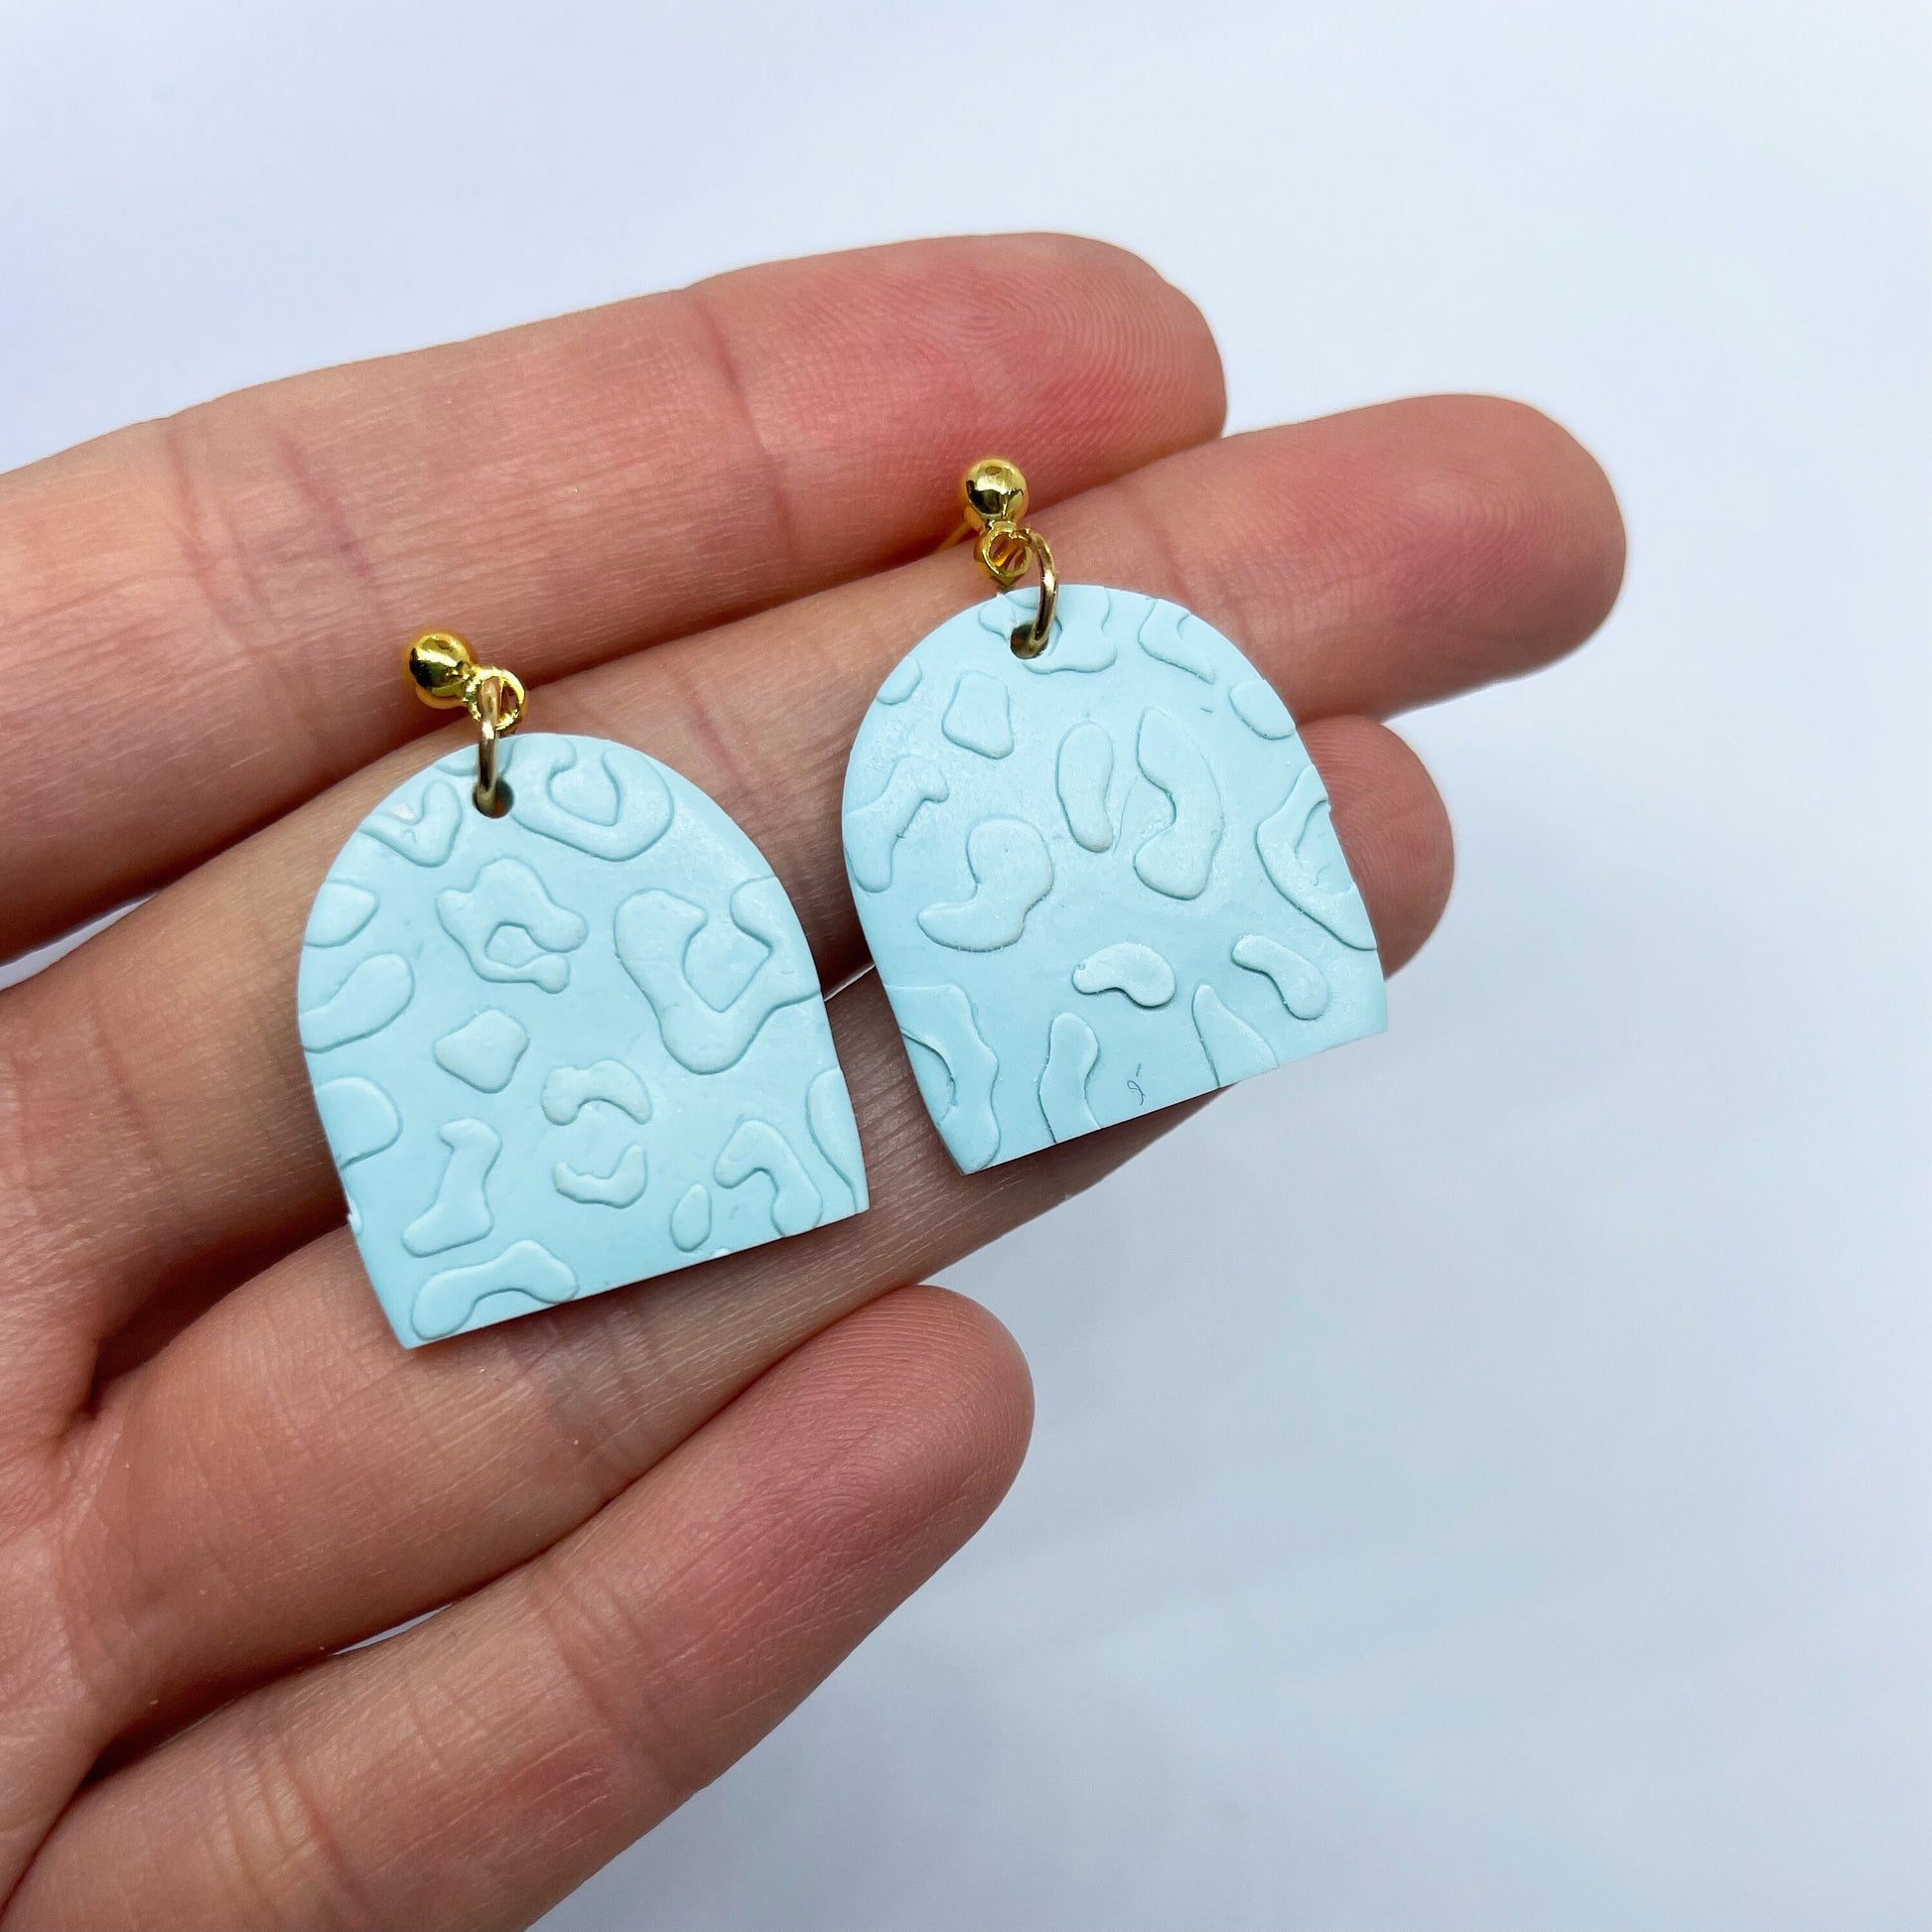 polymer clay leopard print earrings in pale blue, nickel free brass post, post box gift, best friend birthday gift, girlfriend gift,